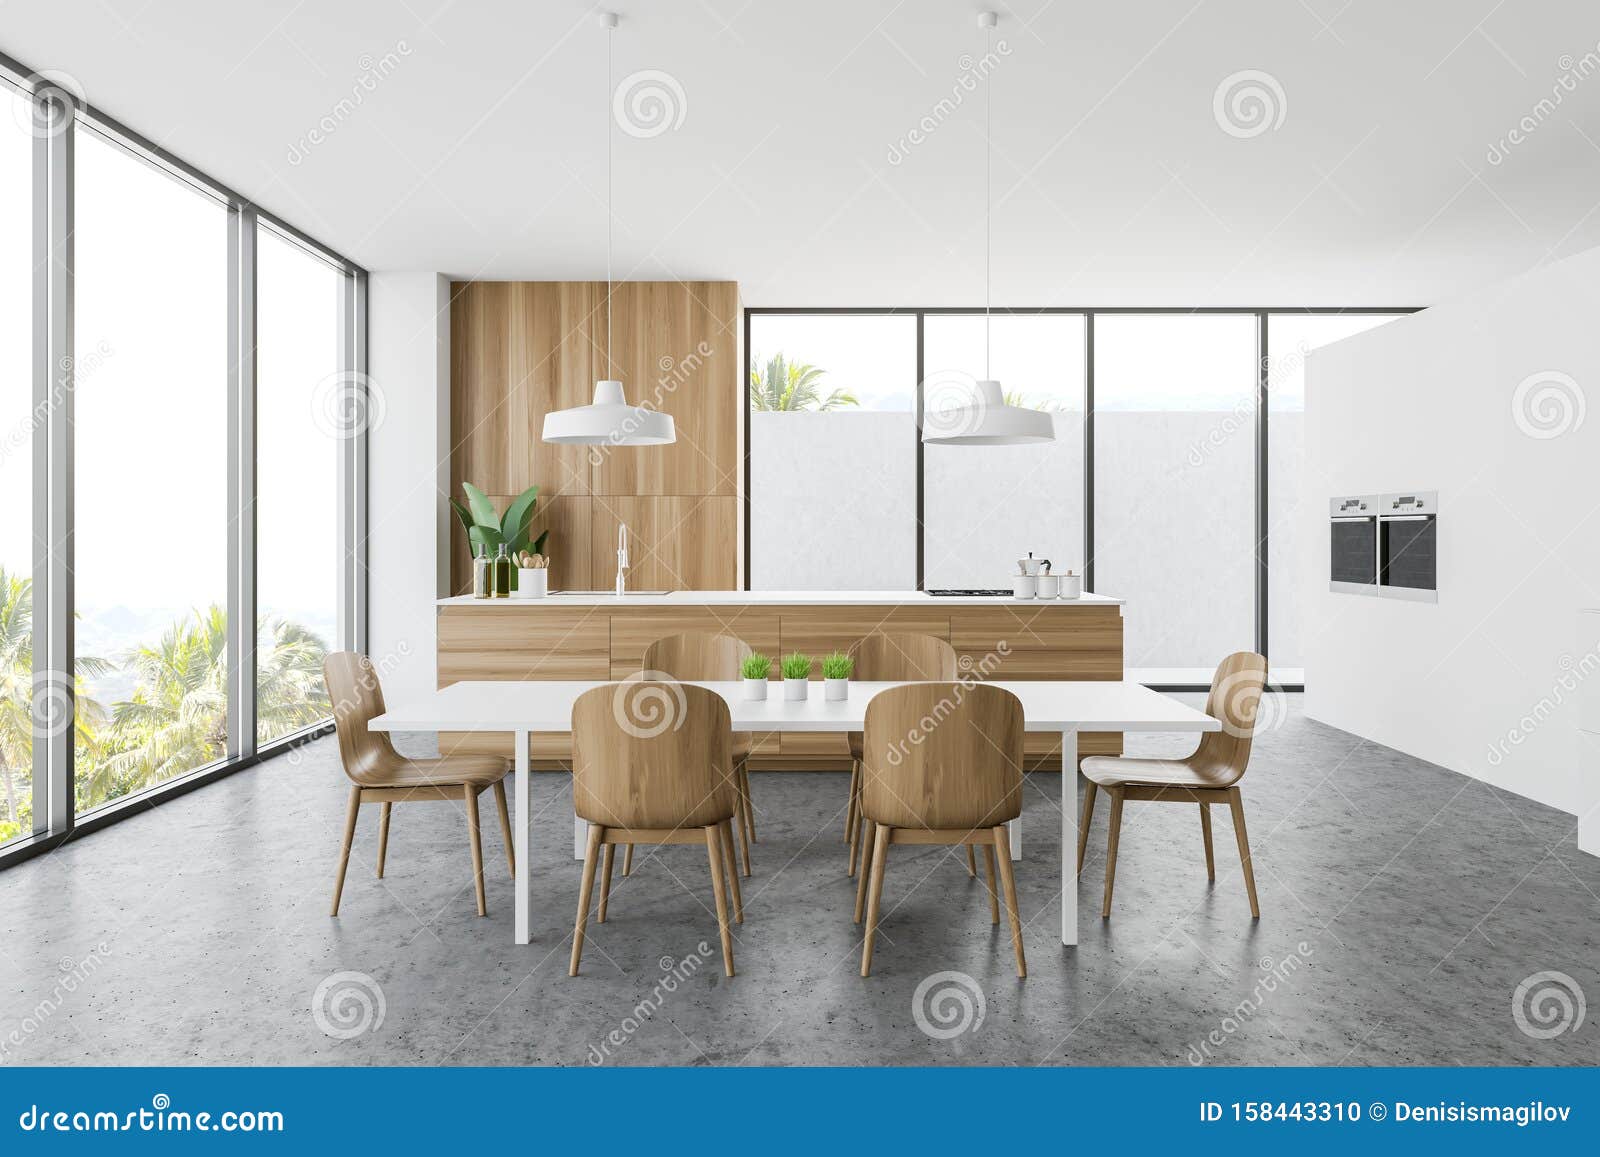 White Kitchen Interior Countertop And Table Stock Illustration